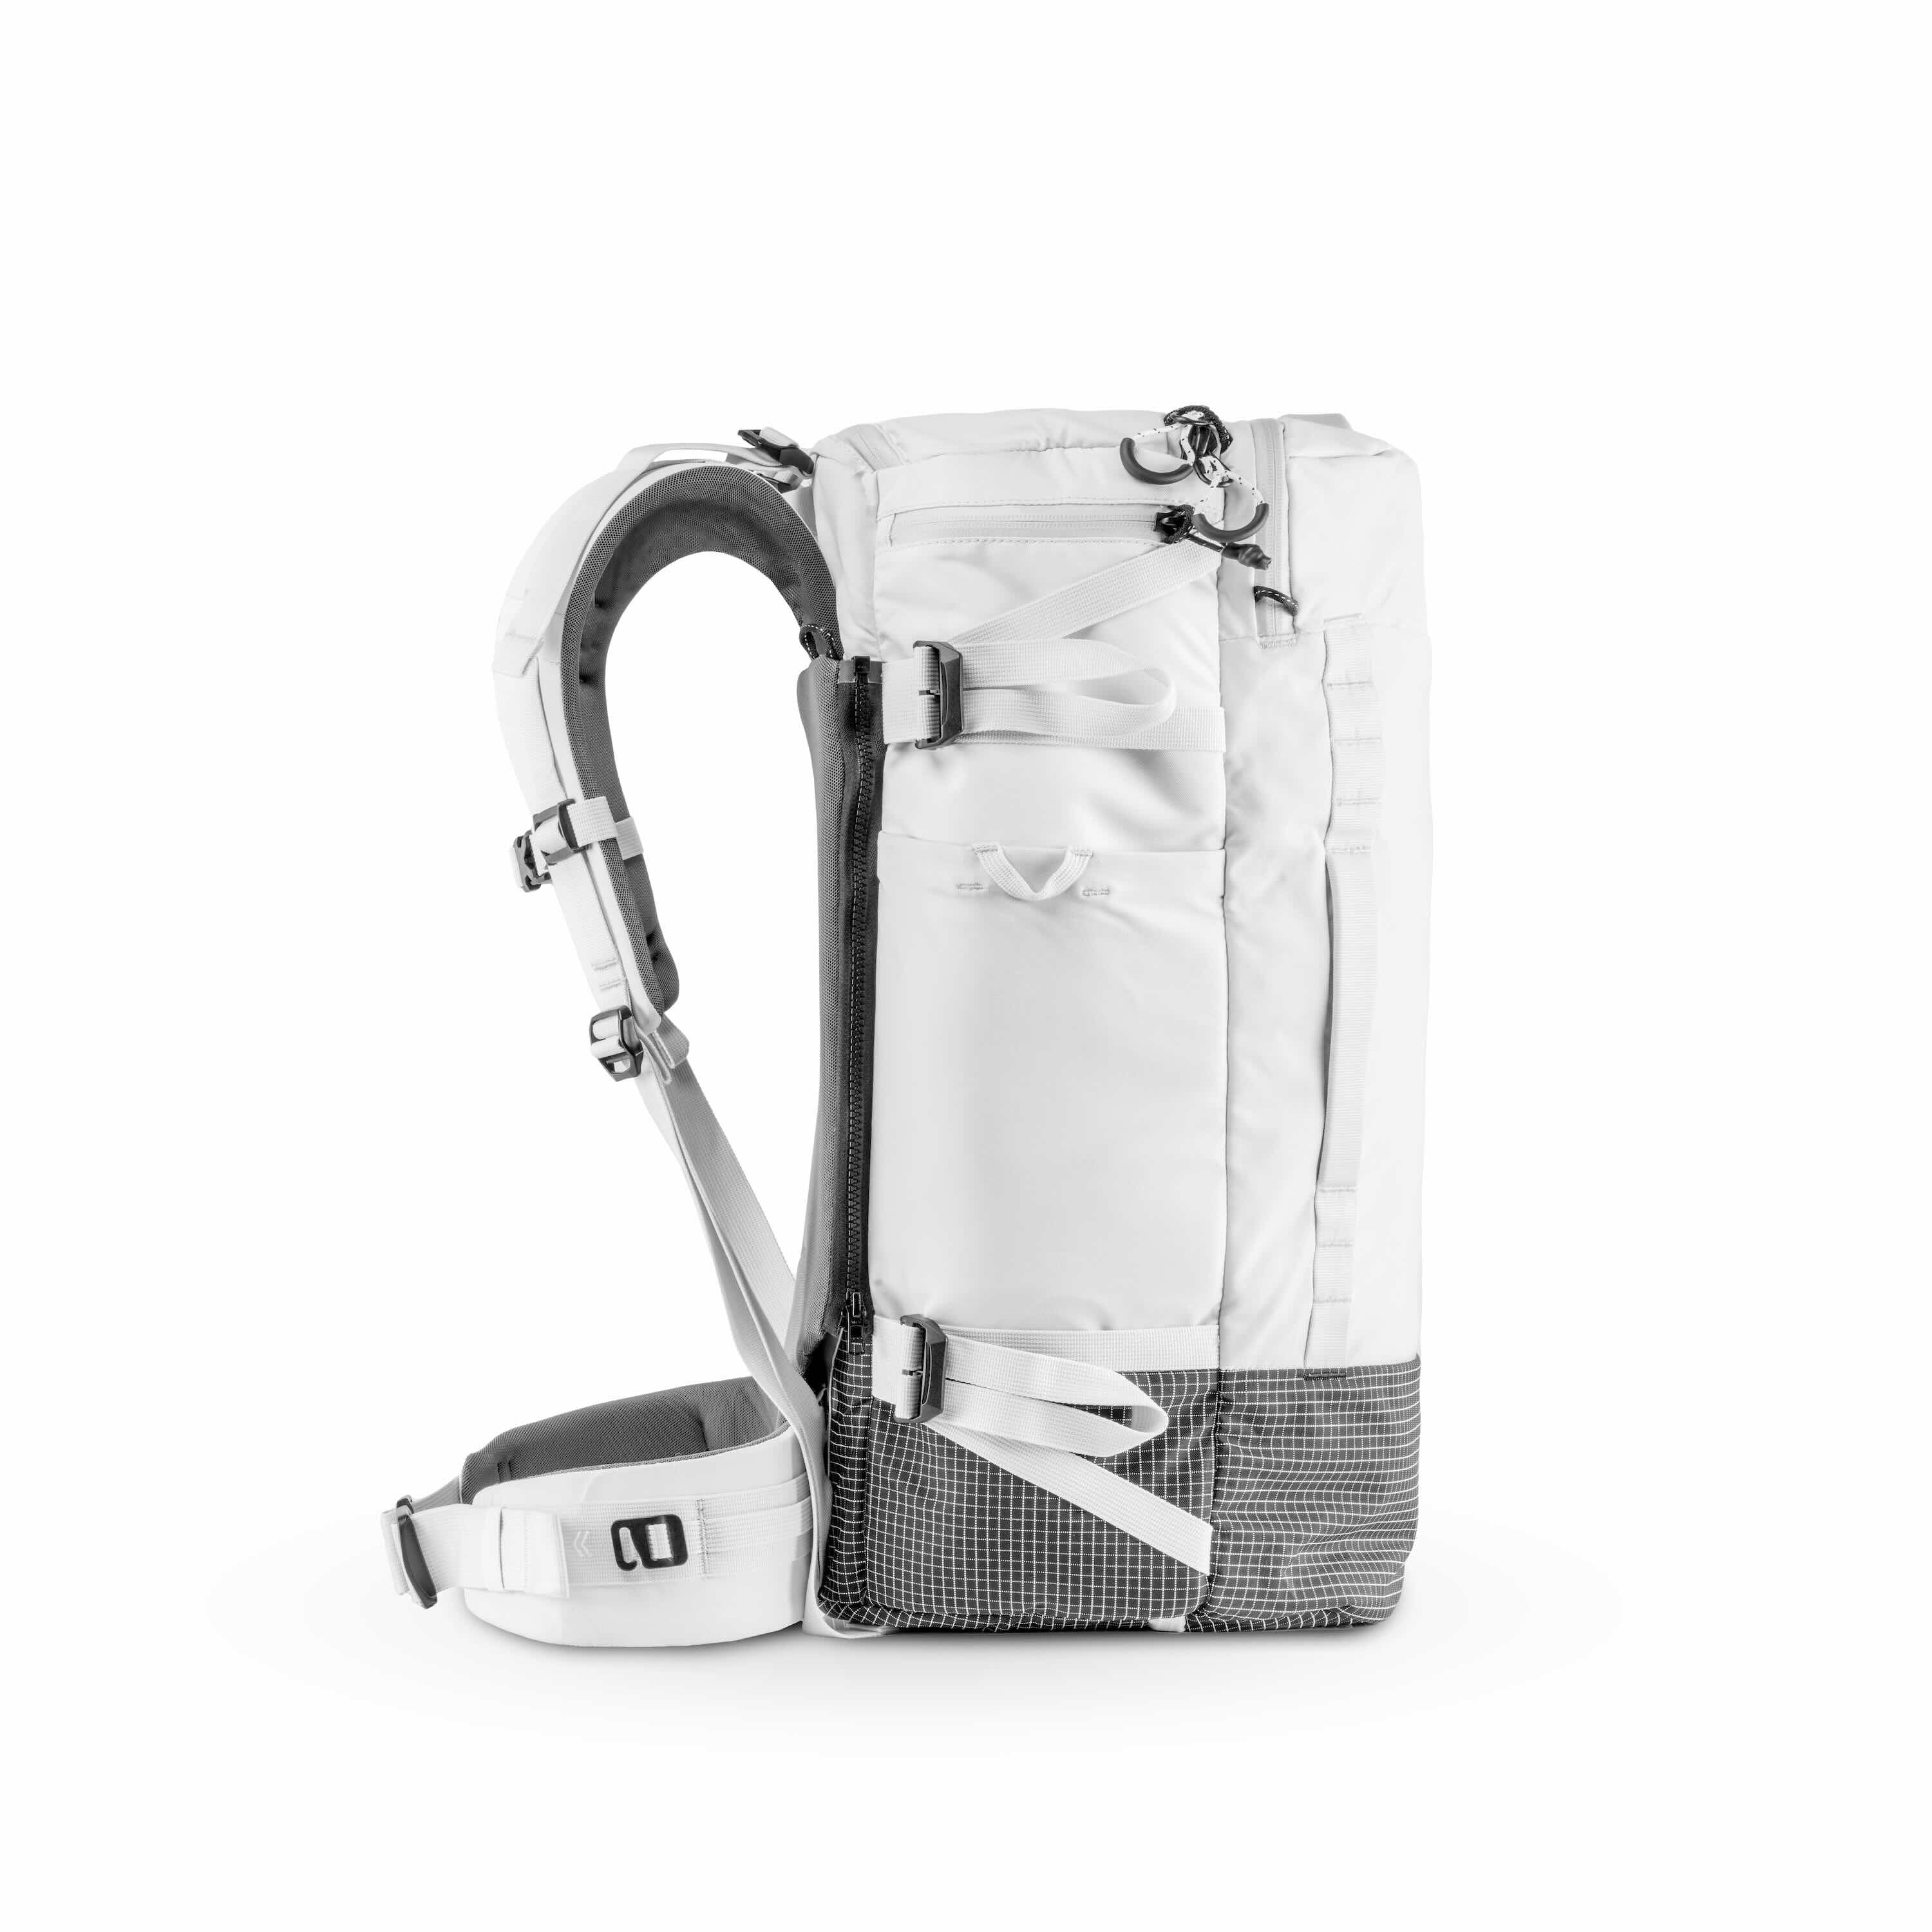 Matador GlobeRider45 Travel Backpack (white)